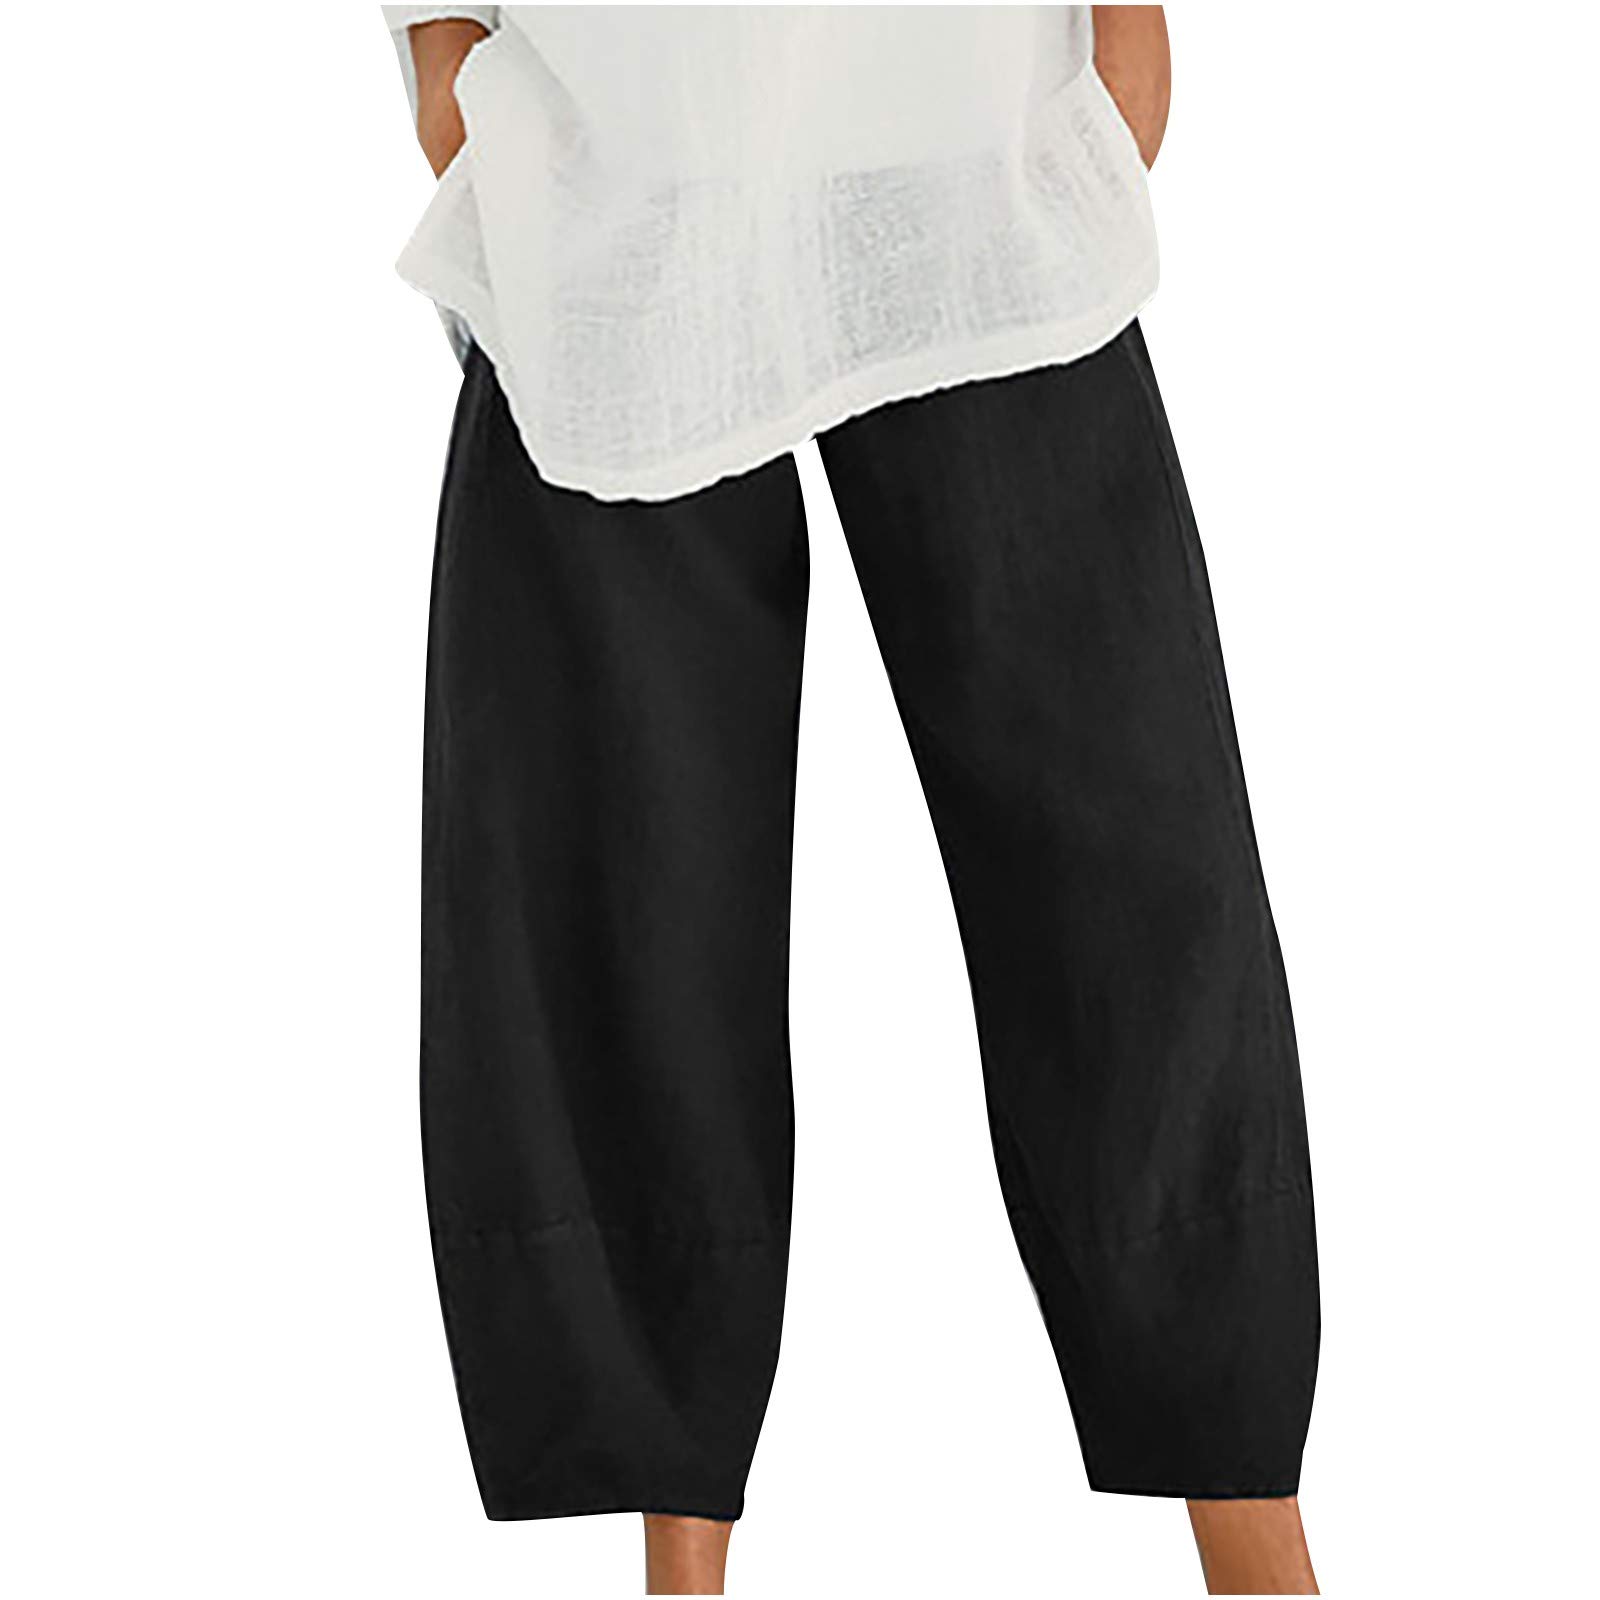 Capri Pants for Women Casual Summer Cotton Linen Pants Loose Elastic Waist  Capris Trousers Tapered Cropped Pants Pockets